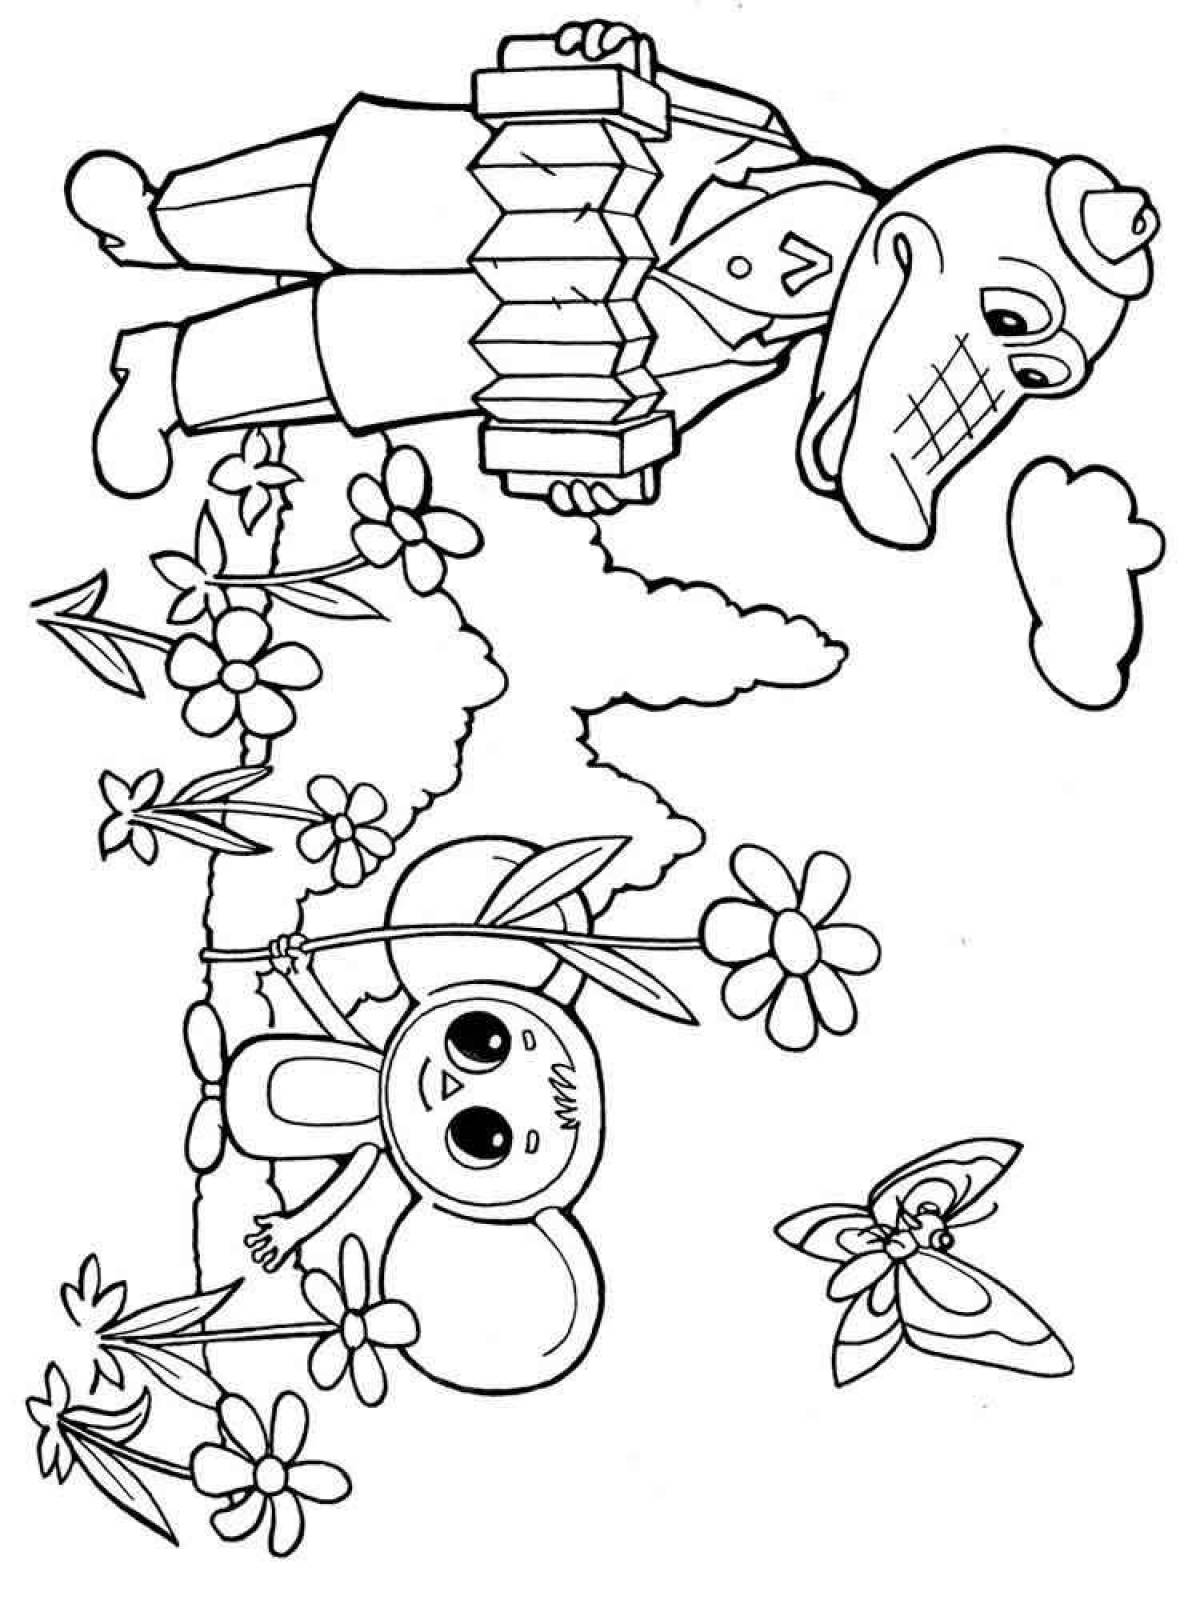 Coloring page charming cheburashka for pre-k